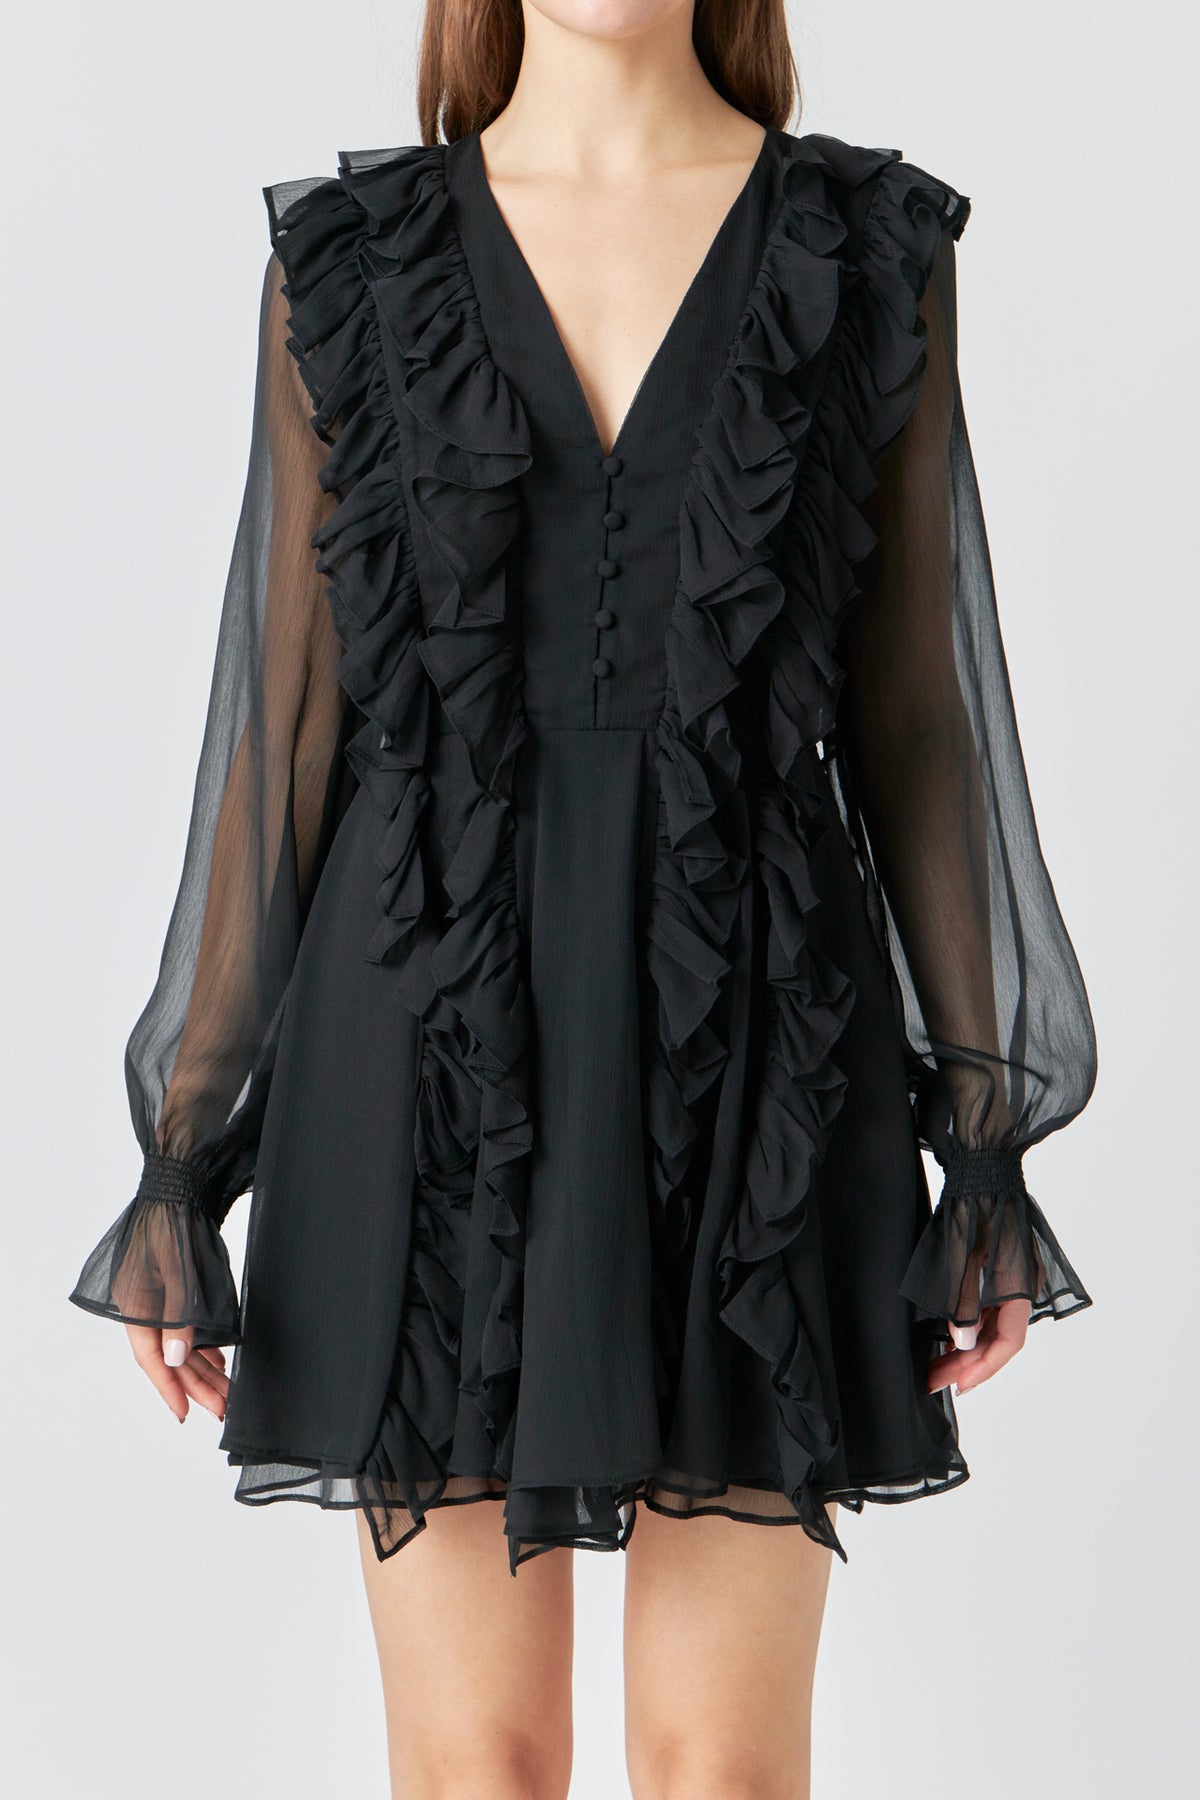 ENDLESS ROSE - Chiffon Long-Sleeve Ruffle Mini Dress - DRESSES available at Objectrare